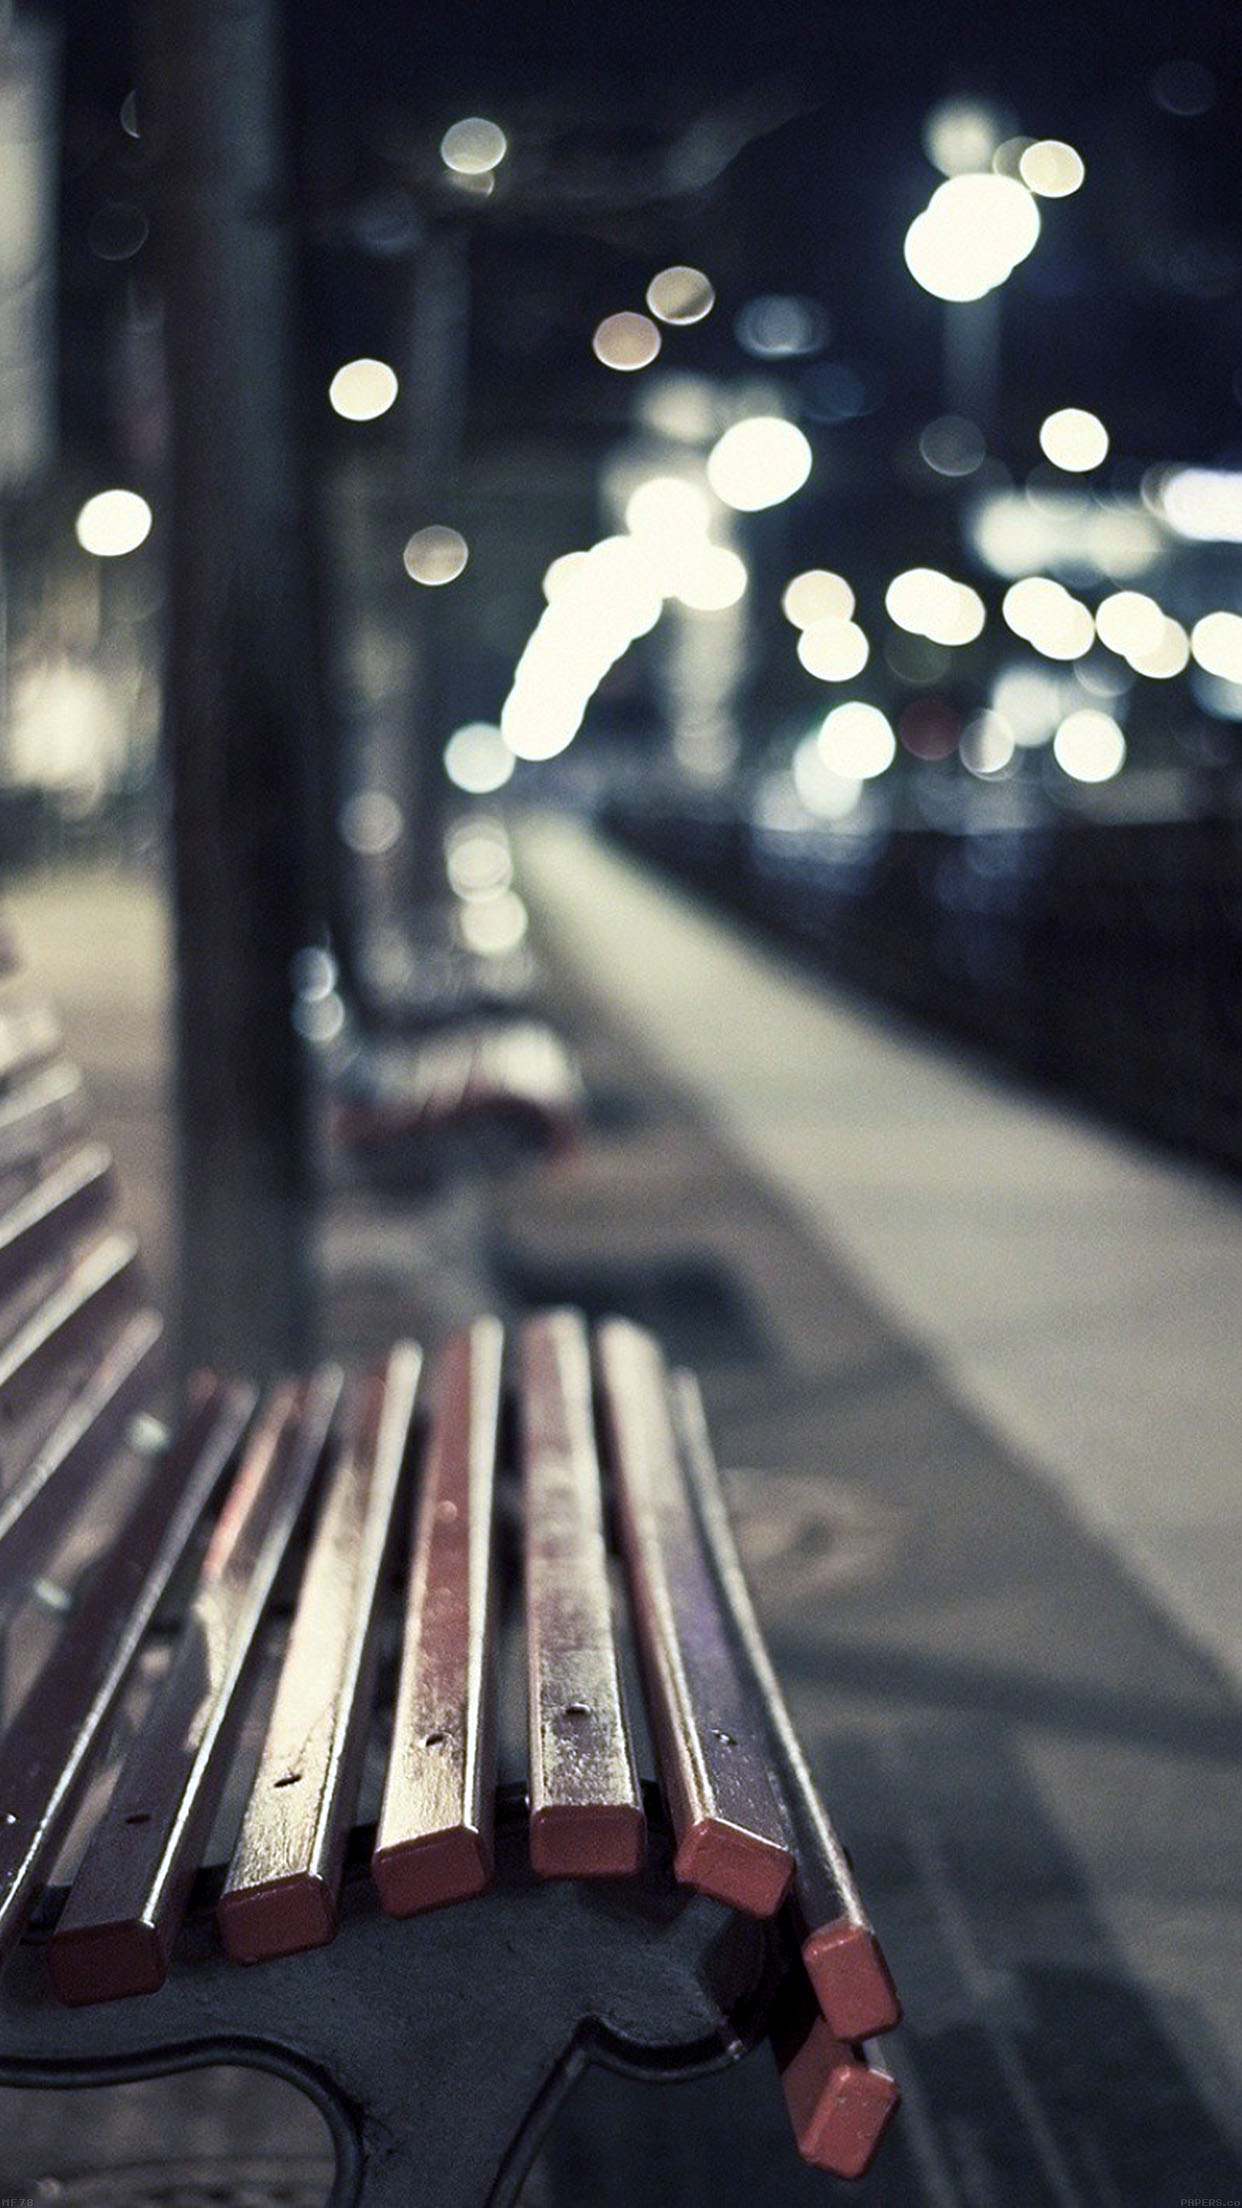 street-chair-melancholy-night-lights-bokeh-city-34-iphone6-plus-wallpaper